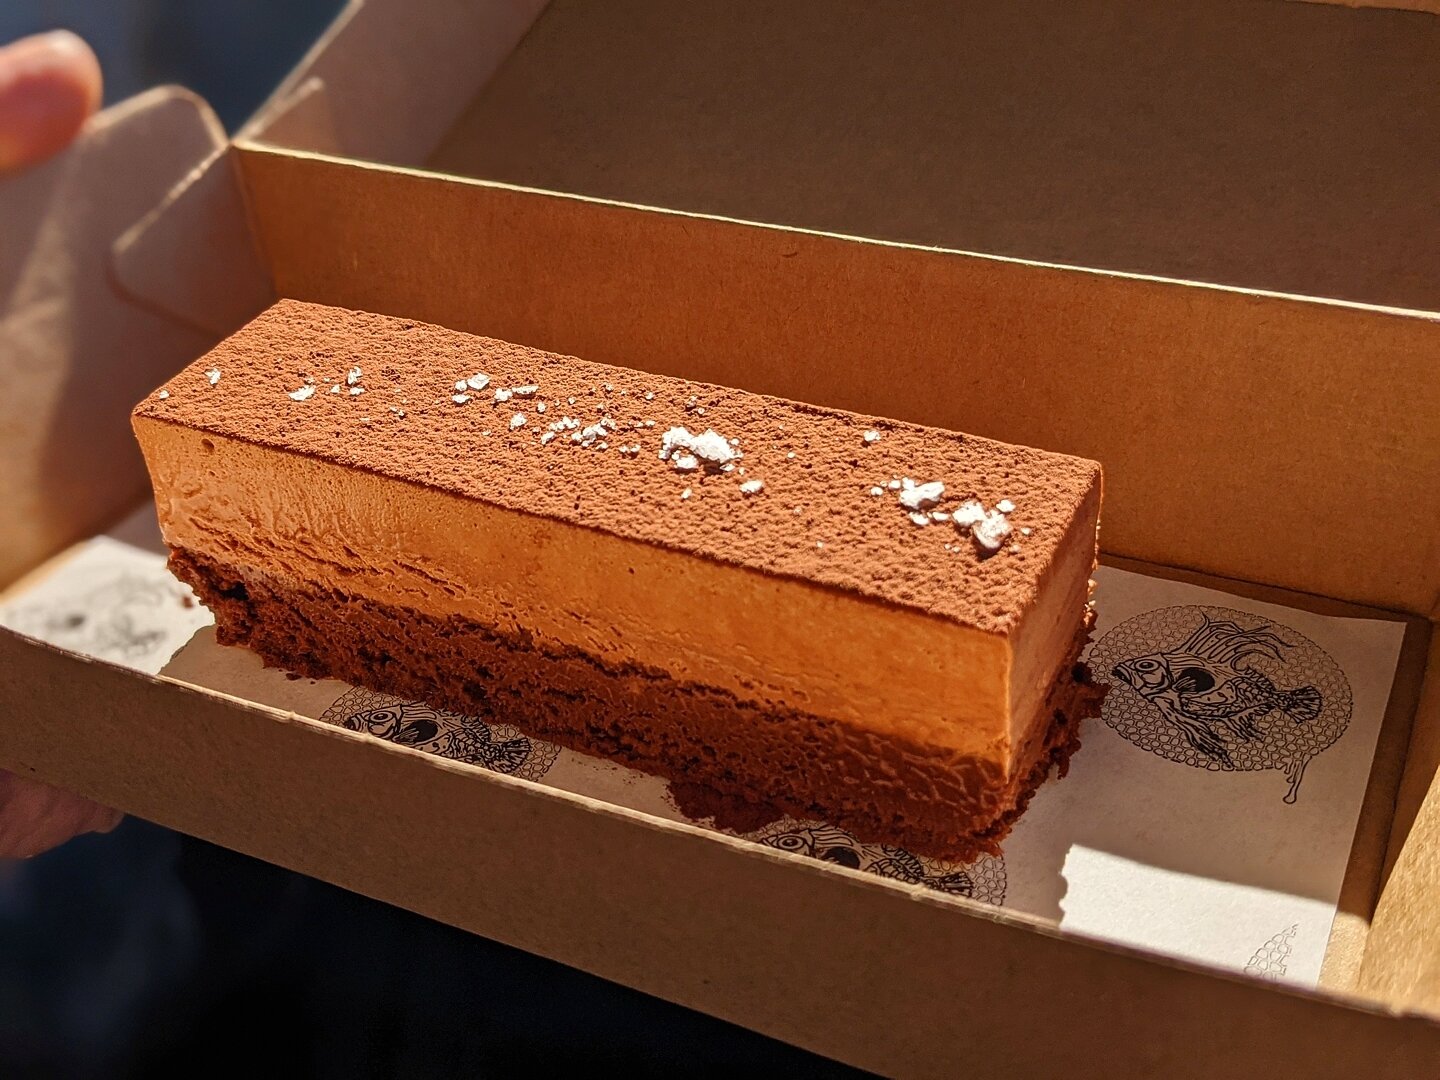 An excellent Valhrona Chocolate Cake prepared by @mansengberg #mrnilandathome
#nofish 
⚫🍫